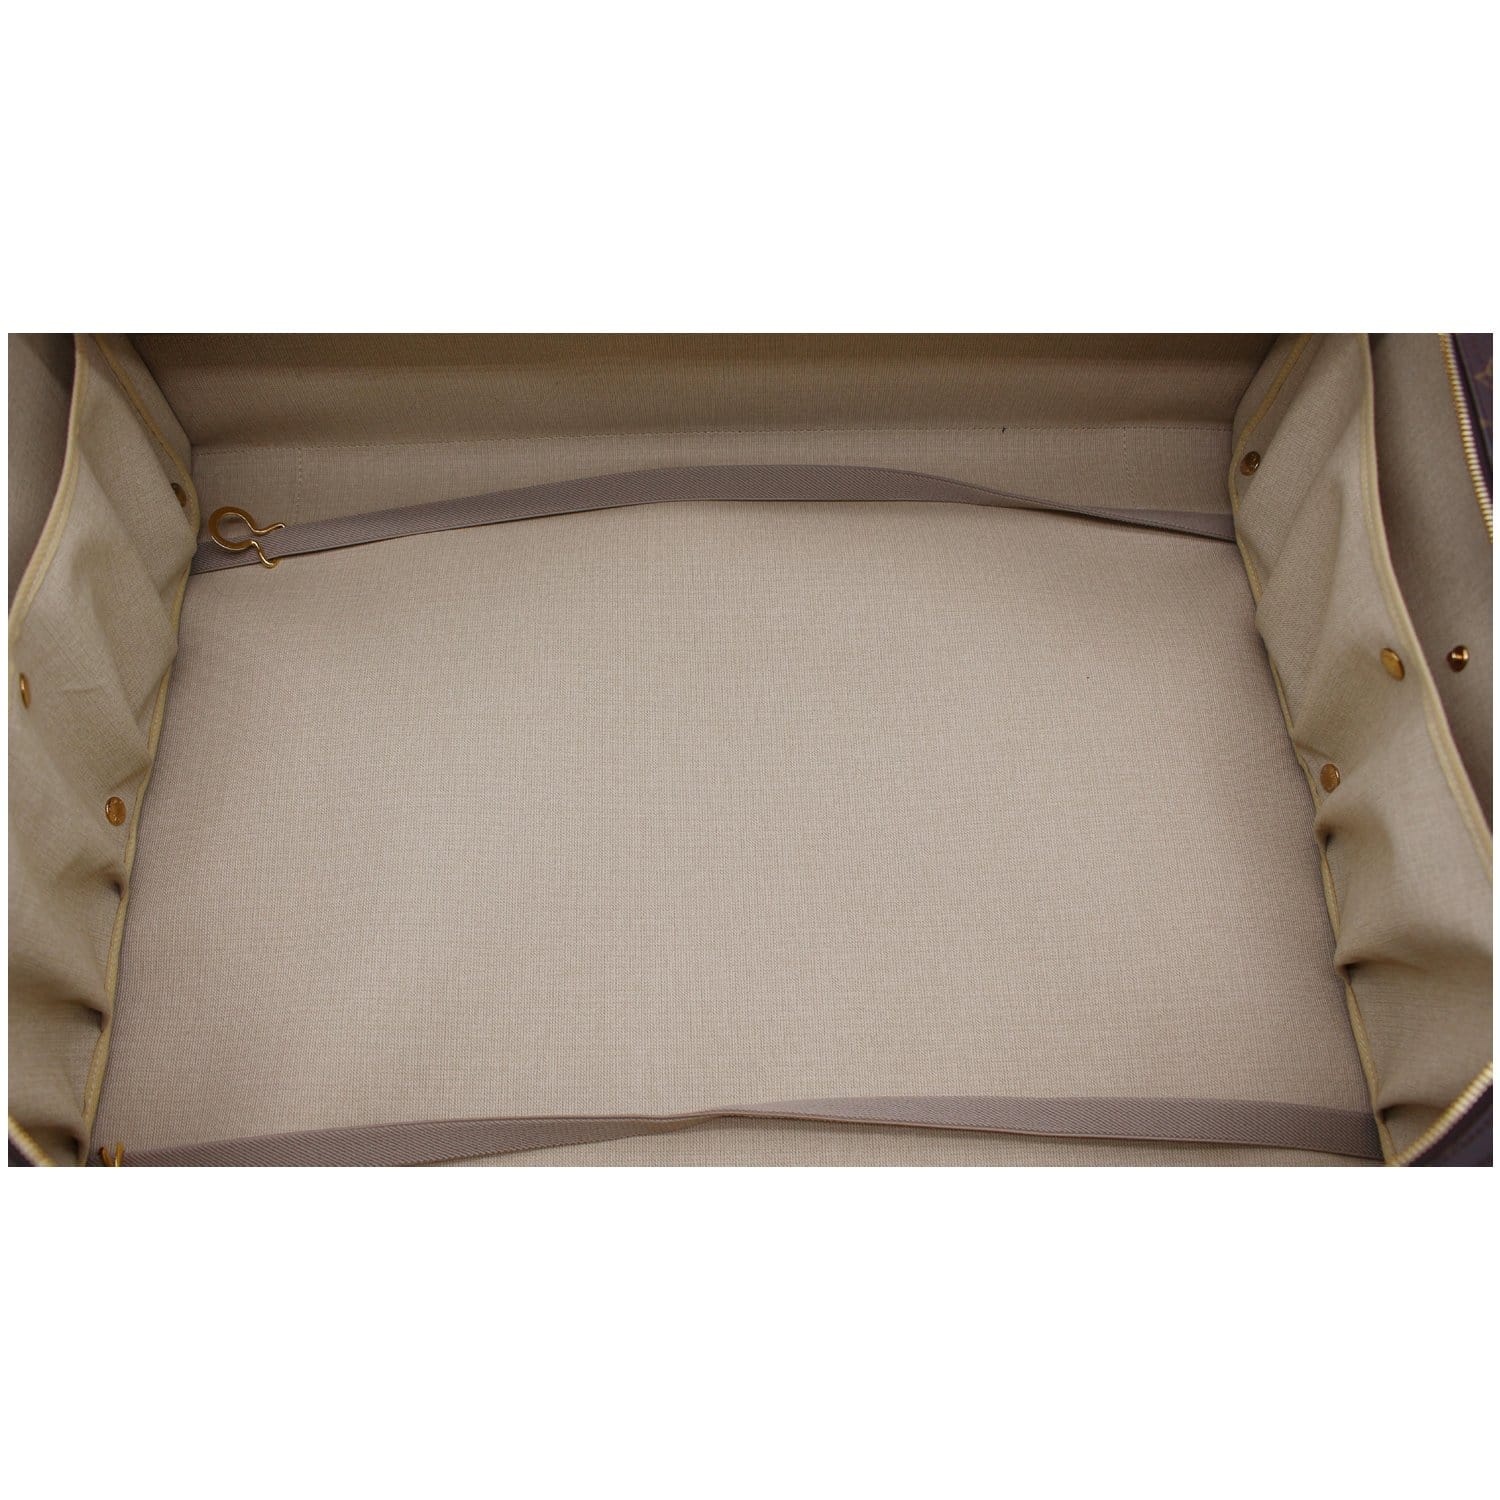 Buy Vintage Louis Vuitton Monogram Pullman 75 Suitcase Online in